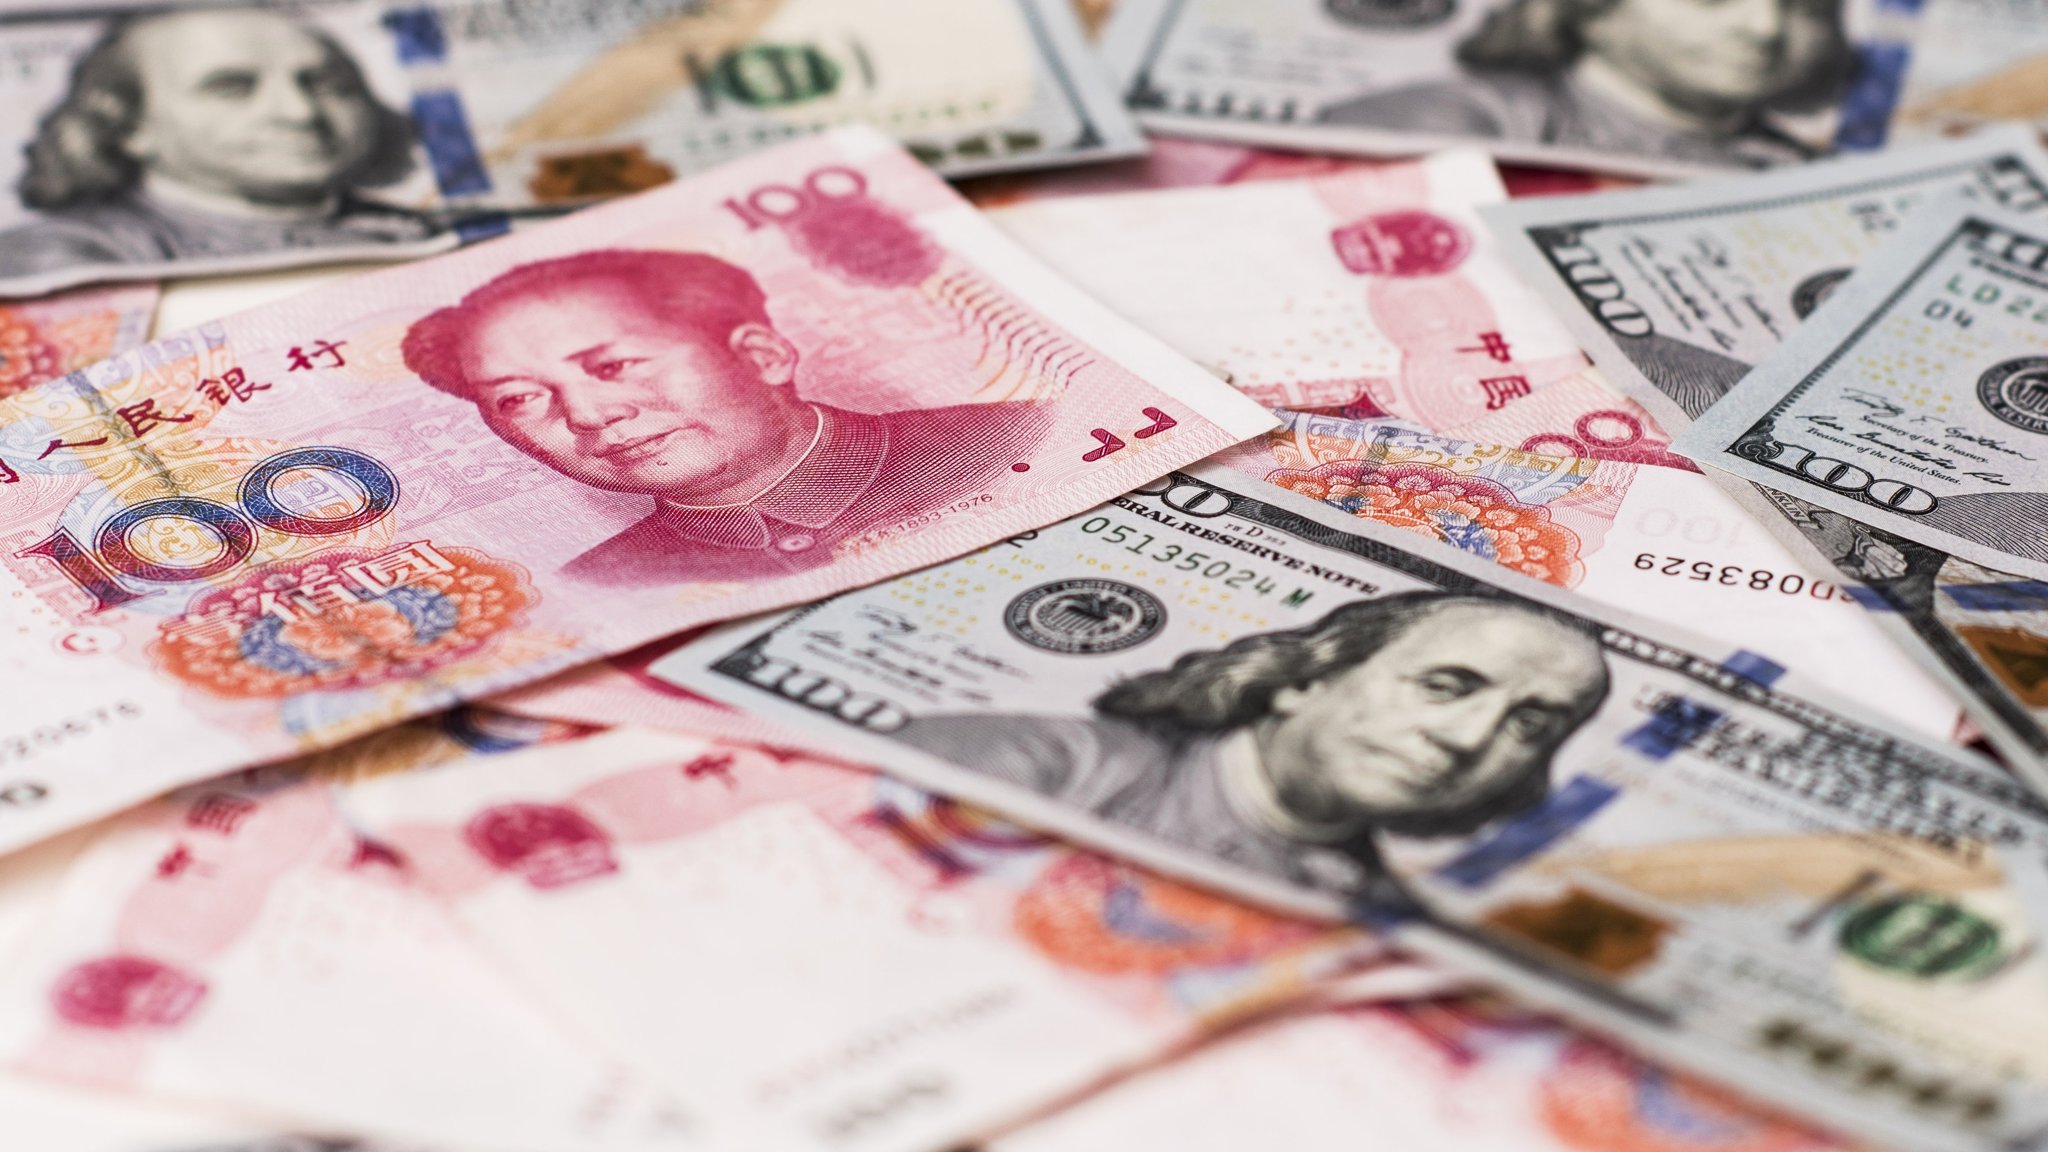 Yuan And Dollar Banknotes Ahead Of Tenth Anniversary Of China's Yuan Reform